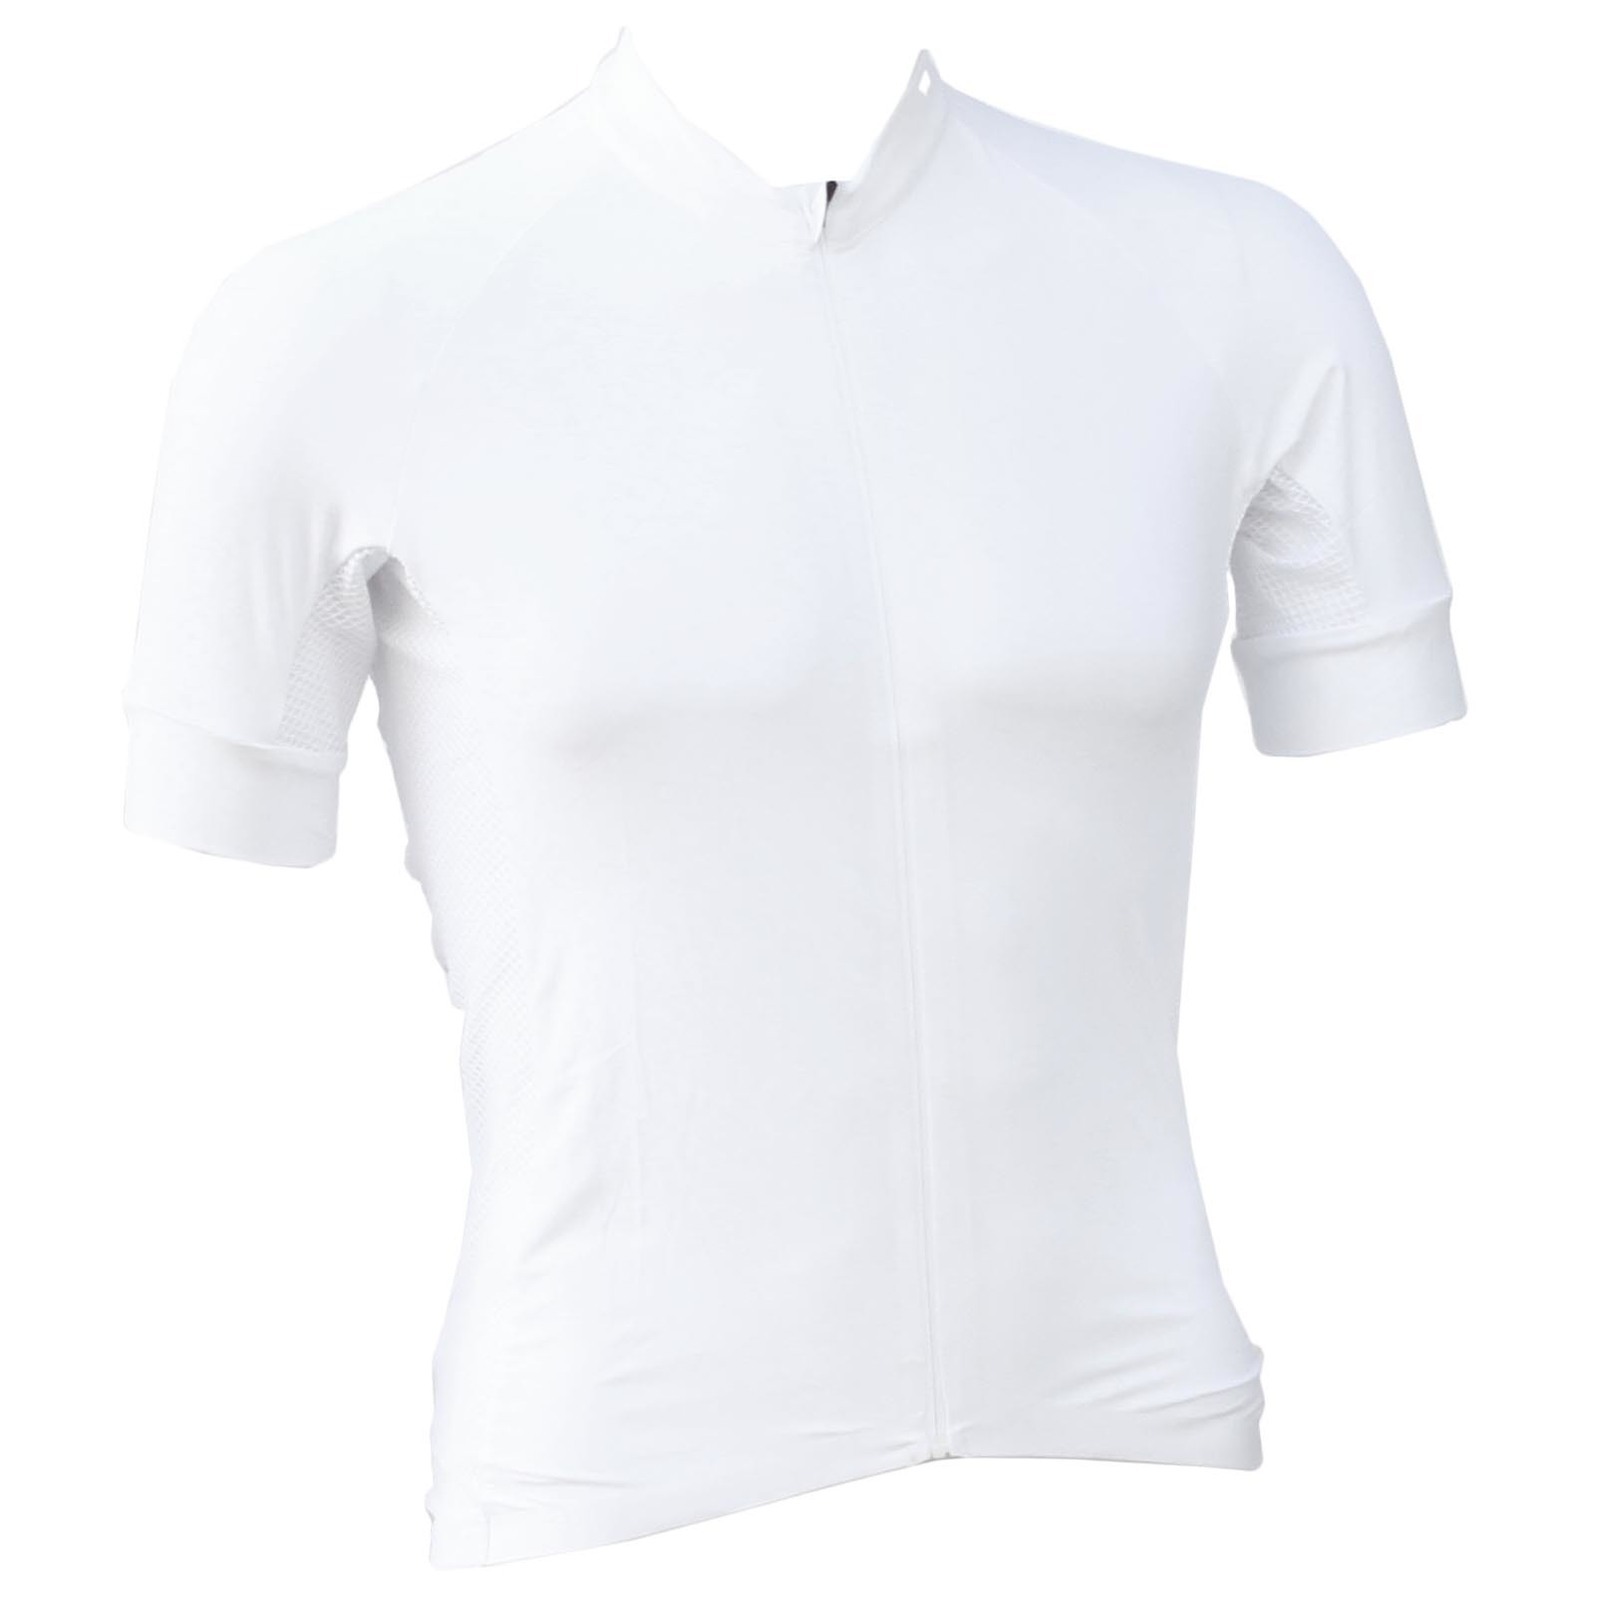 Jackbroad Premium Quality Cycling Short Sleeves White L